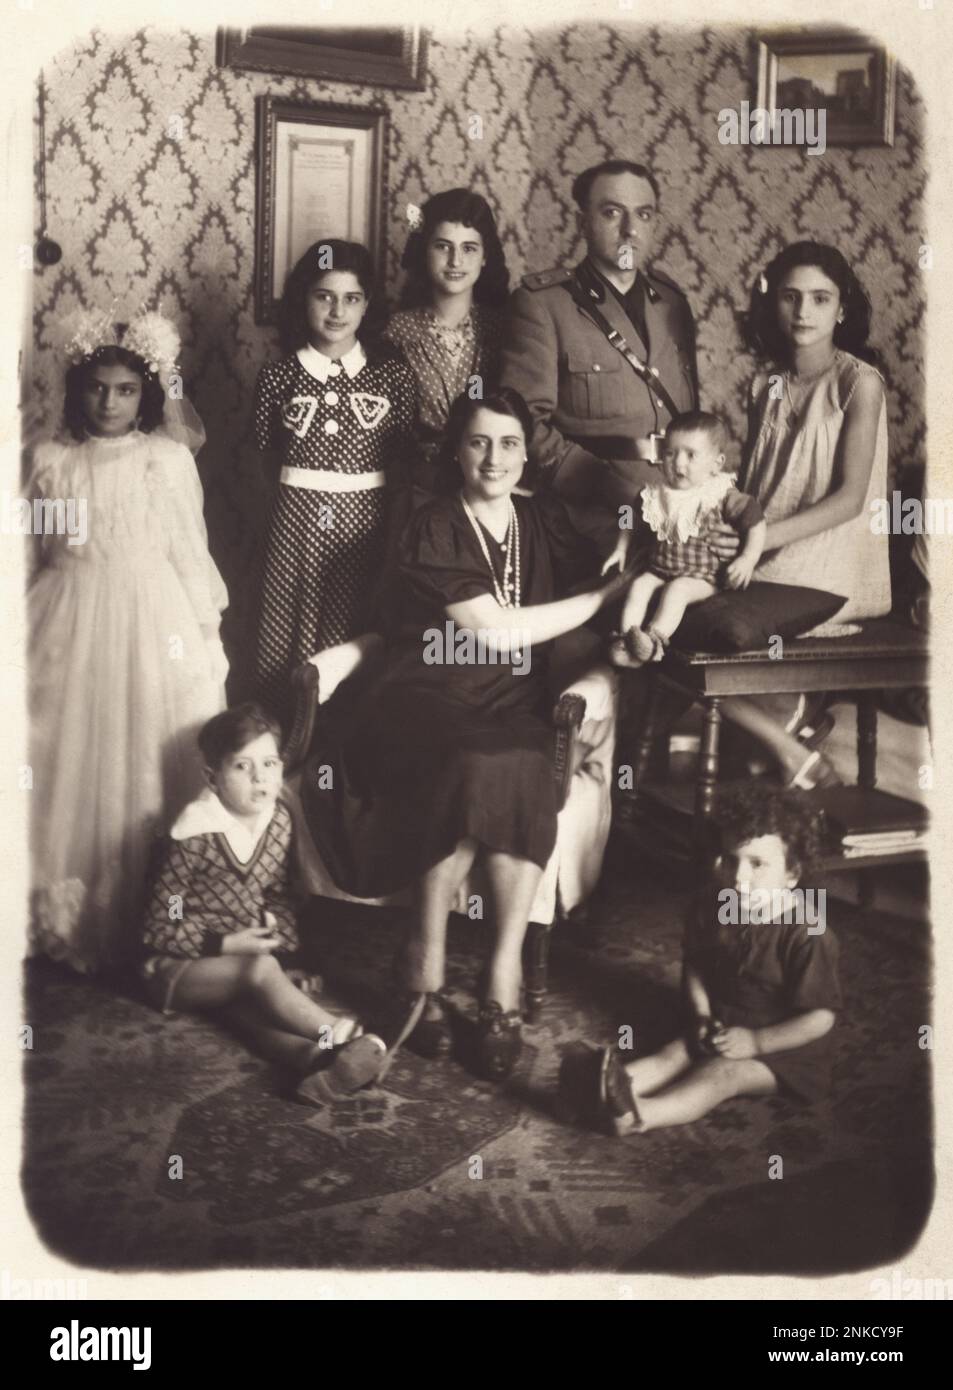 1940 Ca , NEAPEL , ITALIEN : Eine Familie mit 7 Söhnen - WW 2 - II - WELTKRIEG 2. - SECONDA GUERRA MONDIALE - FASCISMO - FASCISTA - FASCHISMUS - ANNI QUARANTA - 40er - '40 - FAMILIE - FAMIGLIA - FIGLI - Figlie - Figlio - marito e moglie - Portrait - ritratto - Militäruniform - uniforme divisa militare - FOTO STORICHE - GESCHICHTSFOTOS - STOCK - ITALIEN - ITALIA - XX. JAHRHUNDERT - NOVECENTO - KIND - KINDER - bambino - Bambini - Bambina - fratelli - Sorelle - Schwestern - Brüder - INCREMENTO DEMOGRAFICO © Archivio GBB / Stockfoto